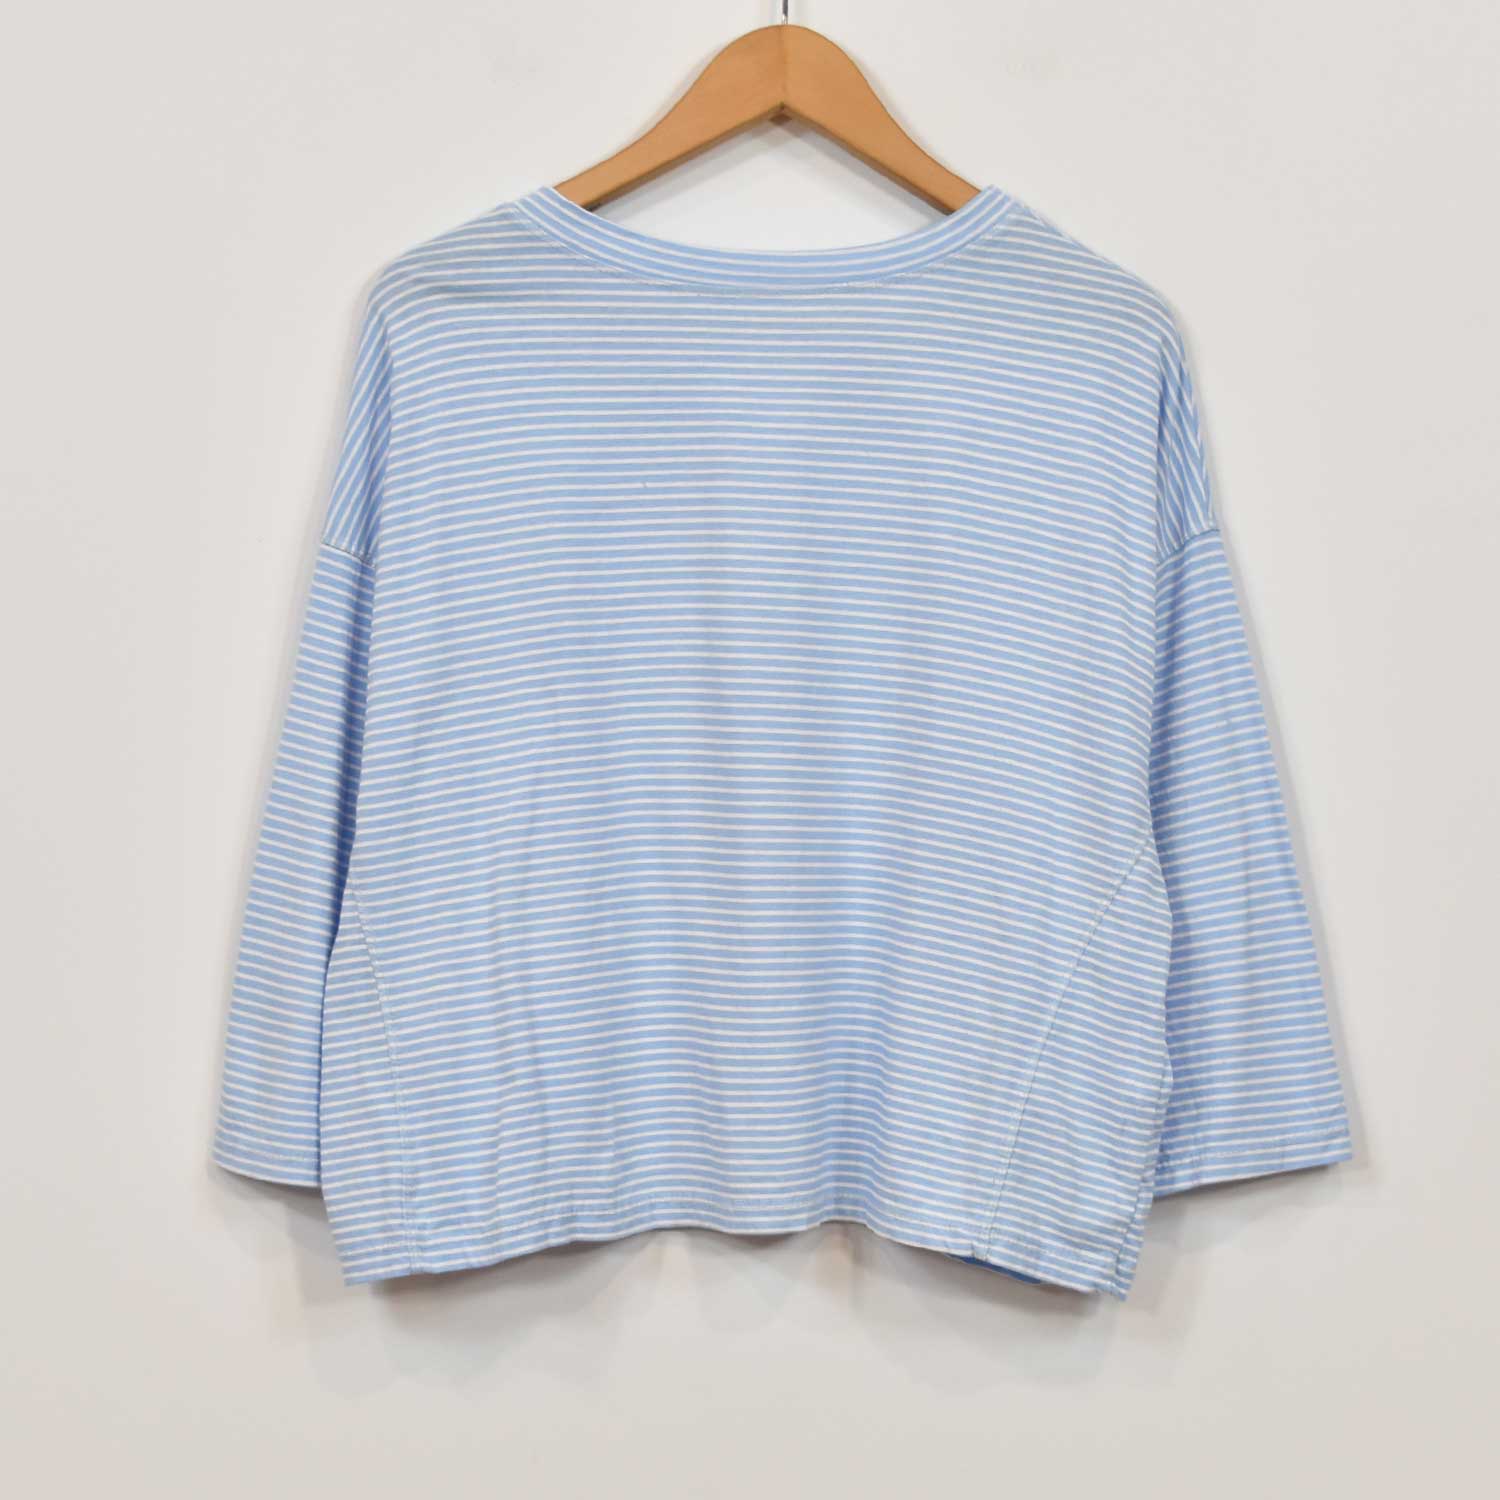 Blue light cotton stripes t-shirt